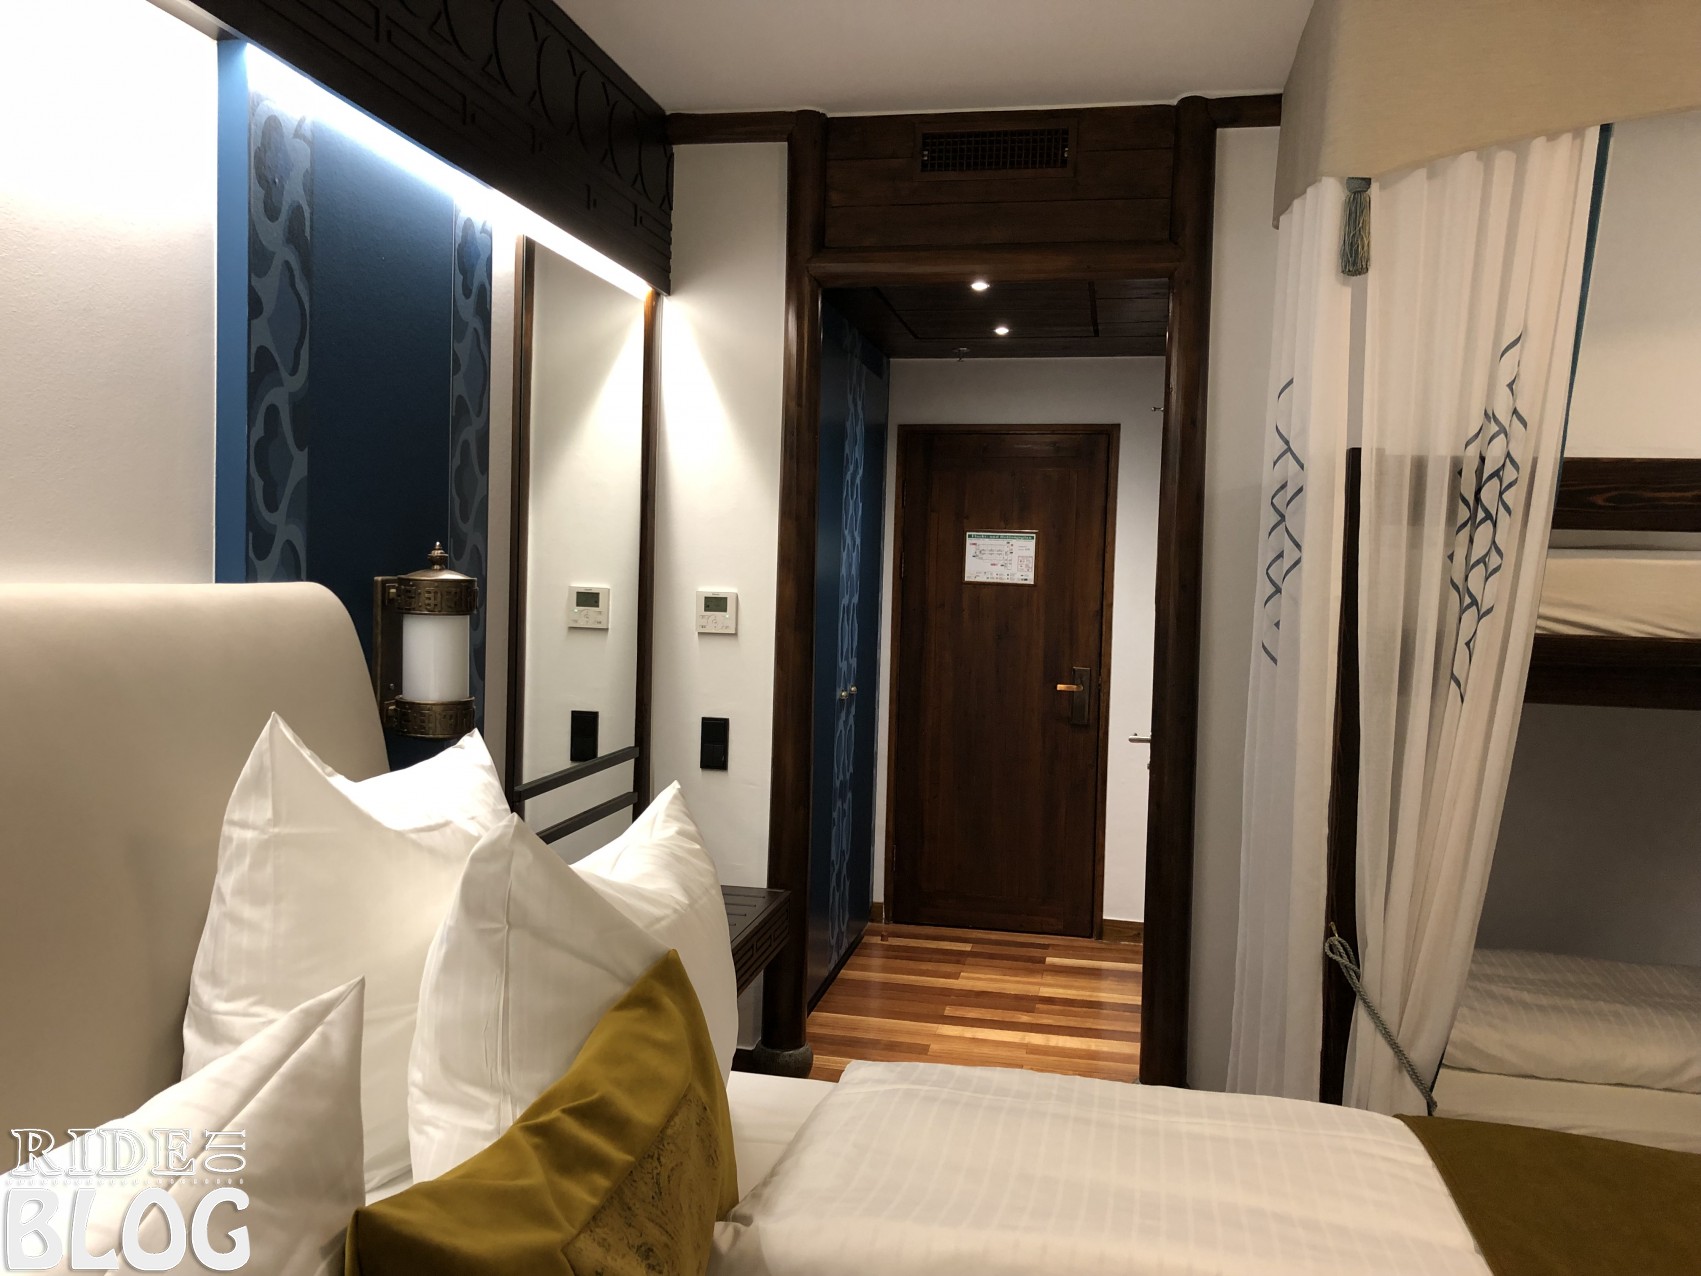 Hotel__Ling_Bao_2019_03-1097-1920-1276-100-wm-left_bottom-100-RideOnBlog1png.jpg